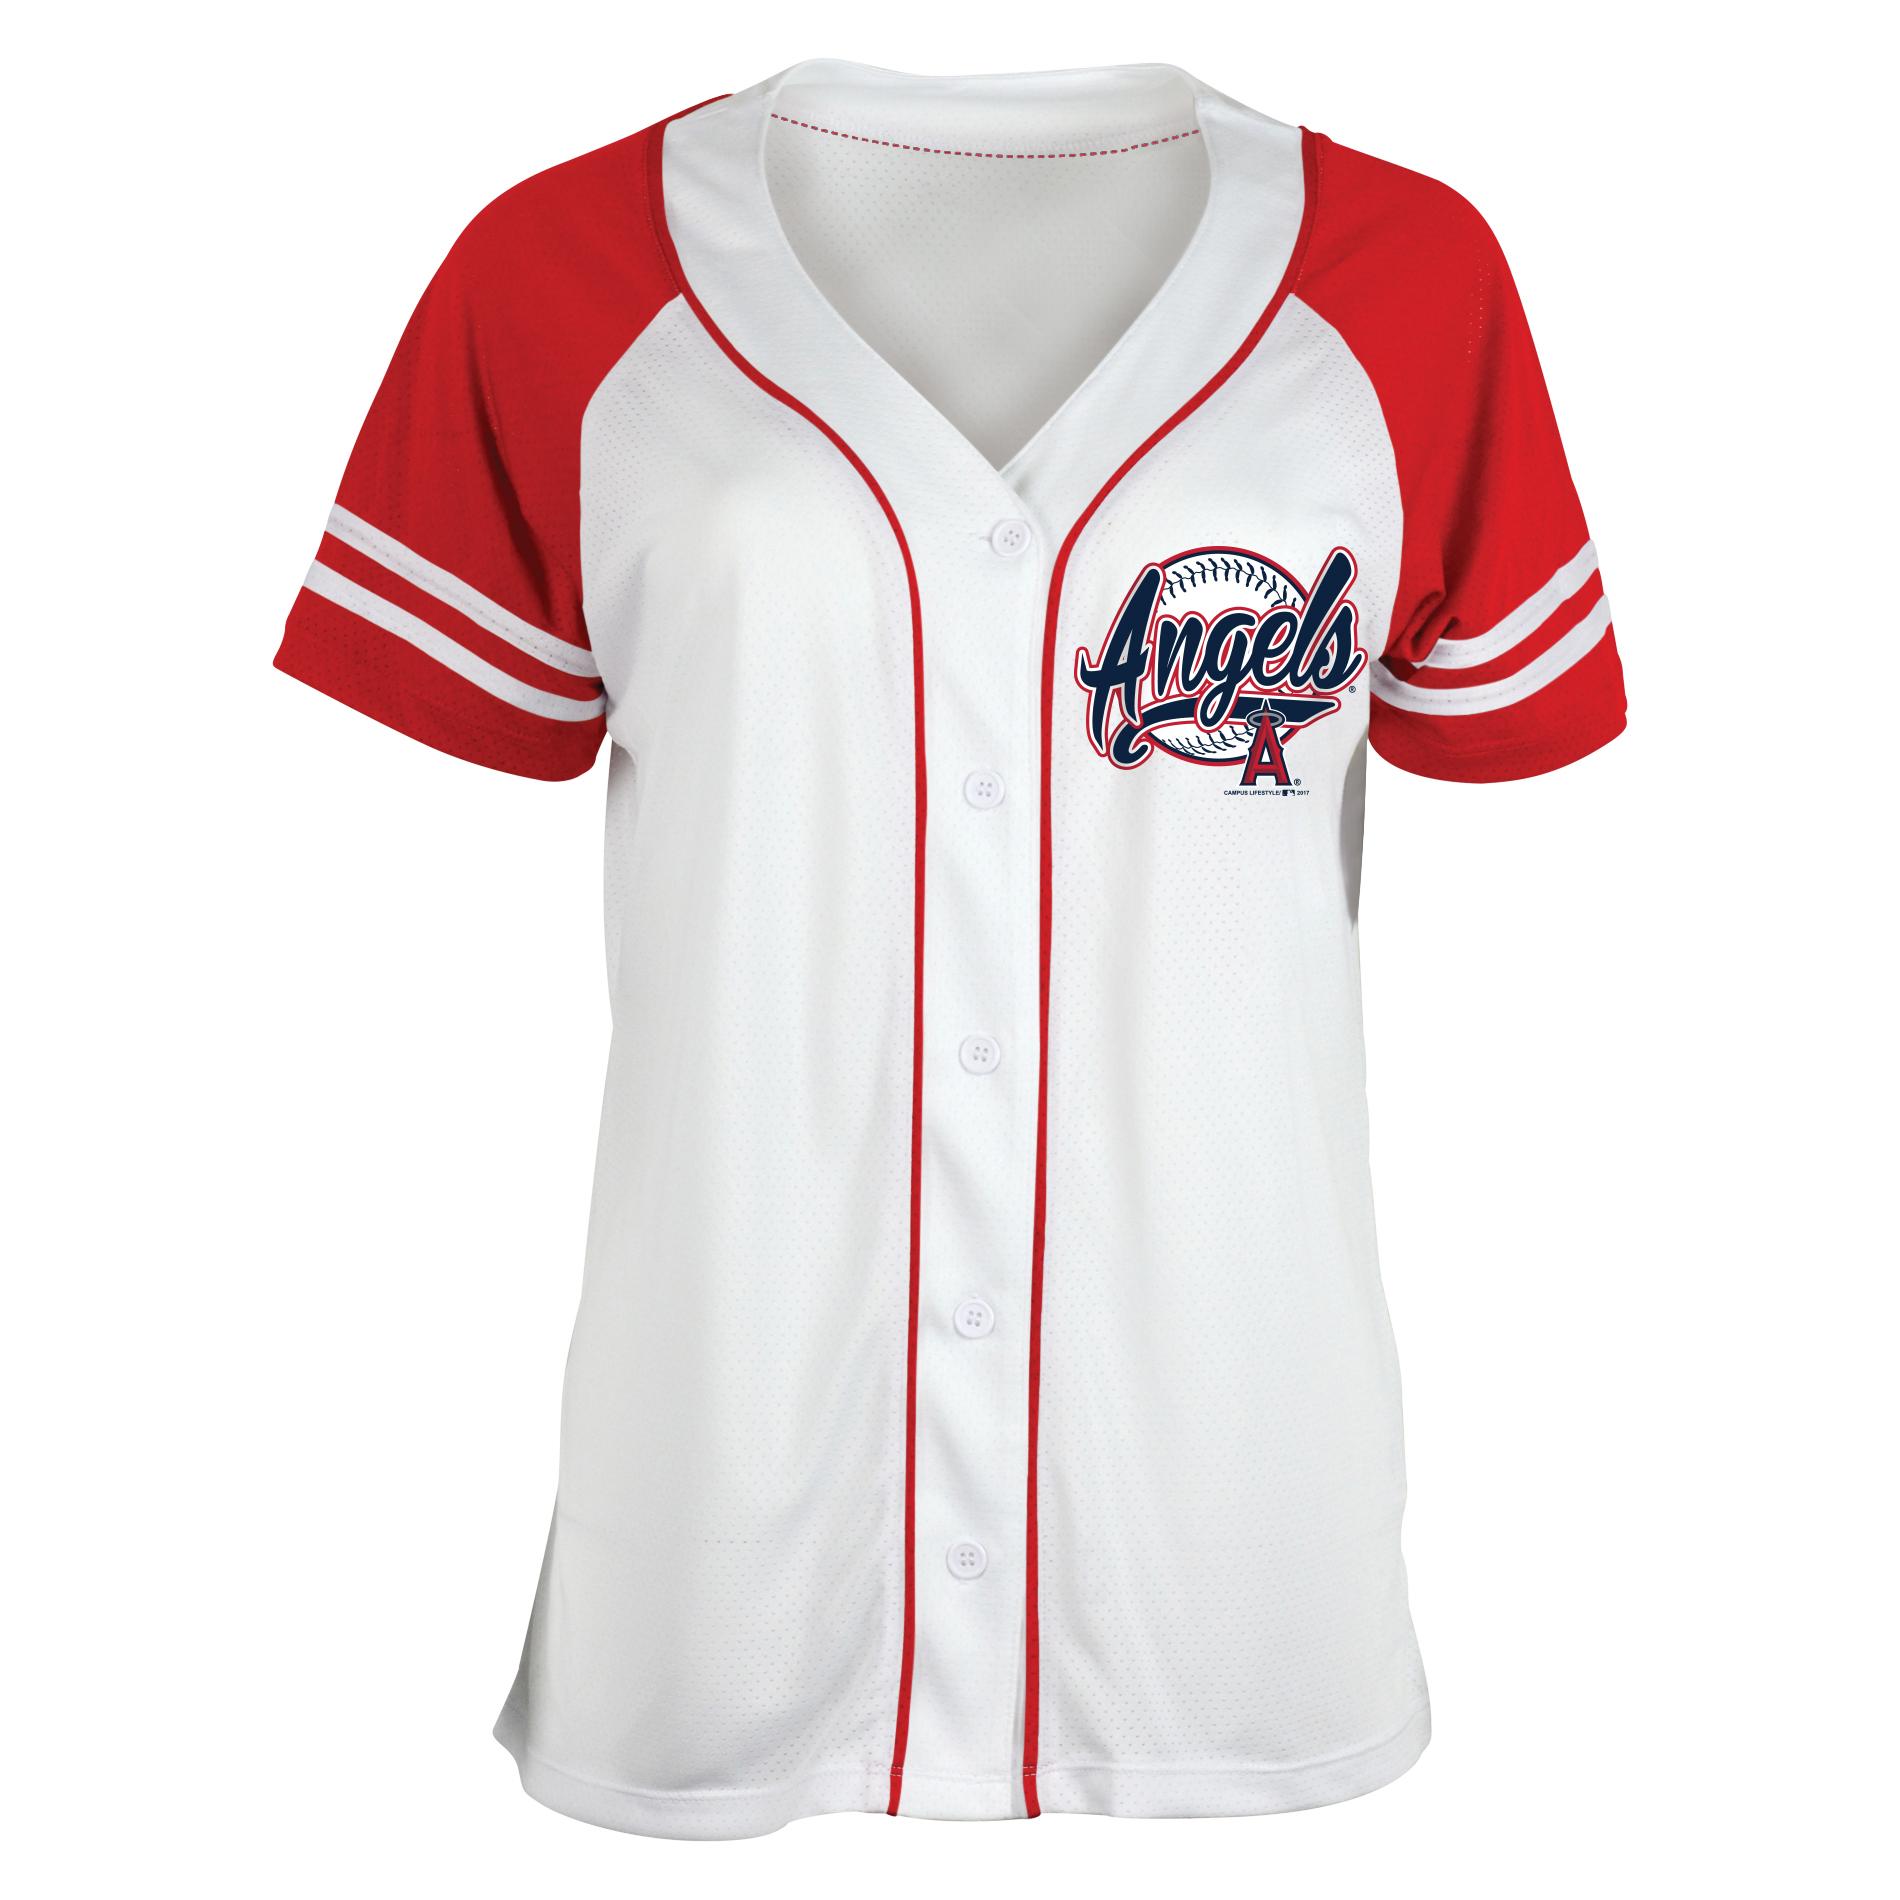 MLB Girls' Baseball Jersey - Los Angeles Angels of Anaheim